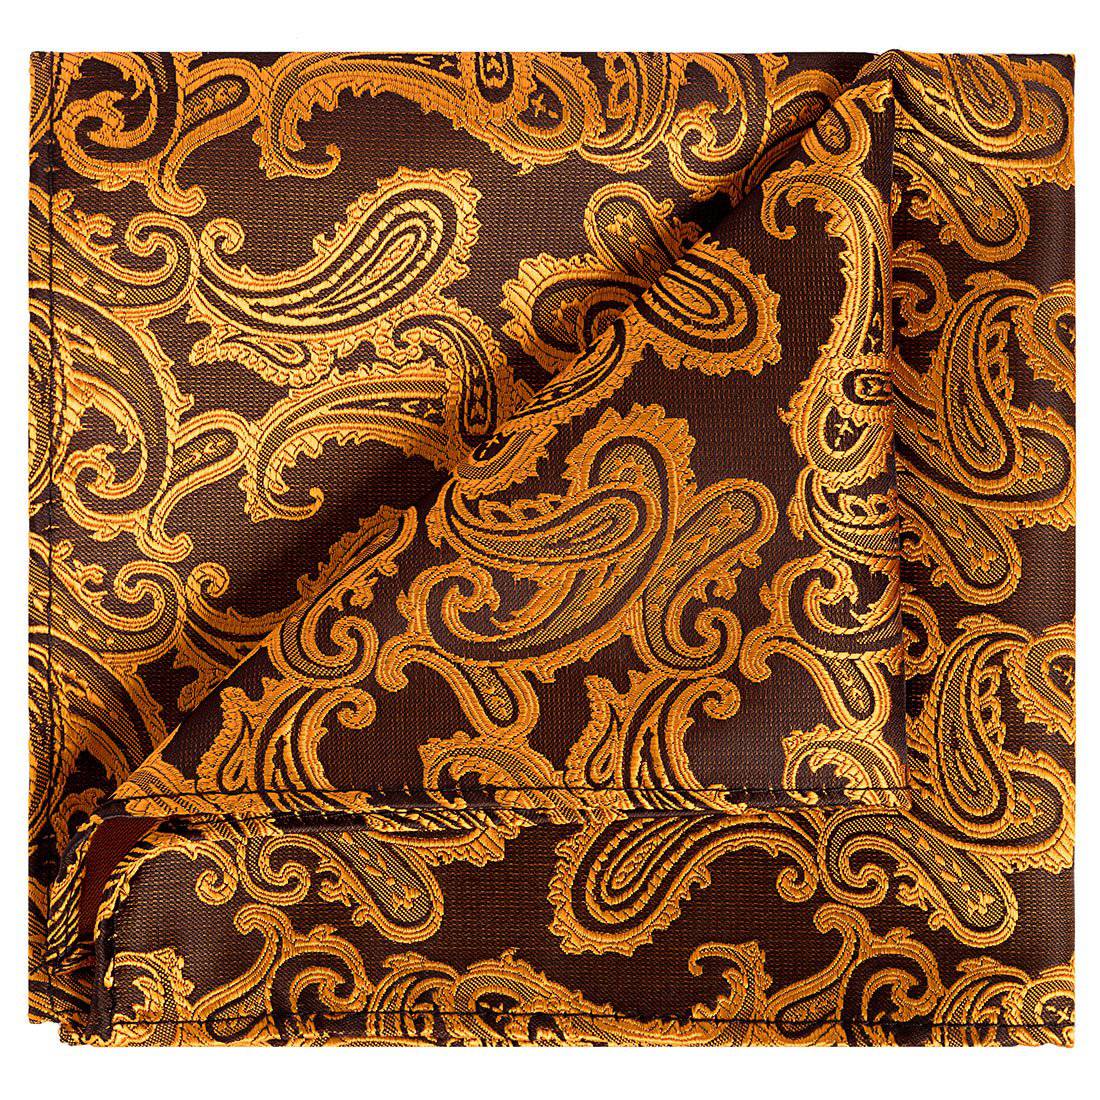 Tiger Orange on Black Paisley Pocket Square - Tie, bowtie, pocket square  | Kissties